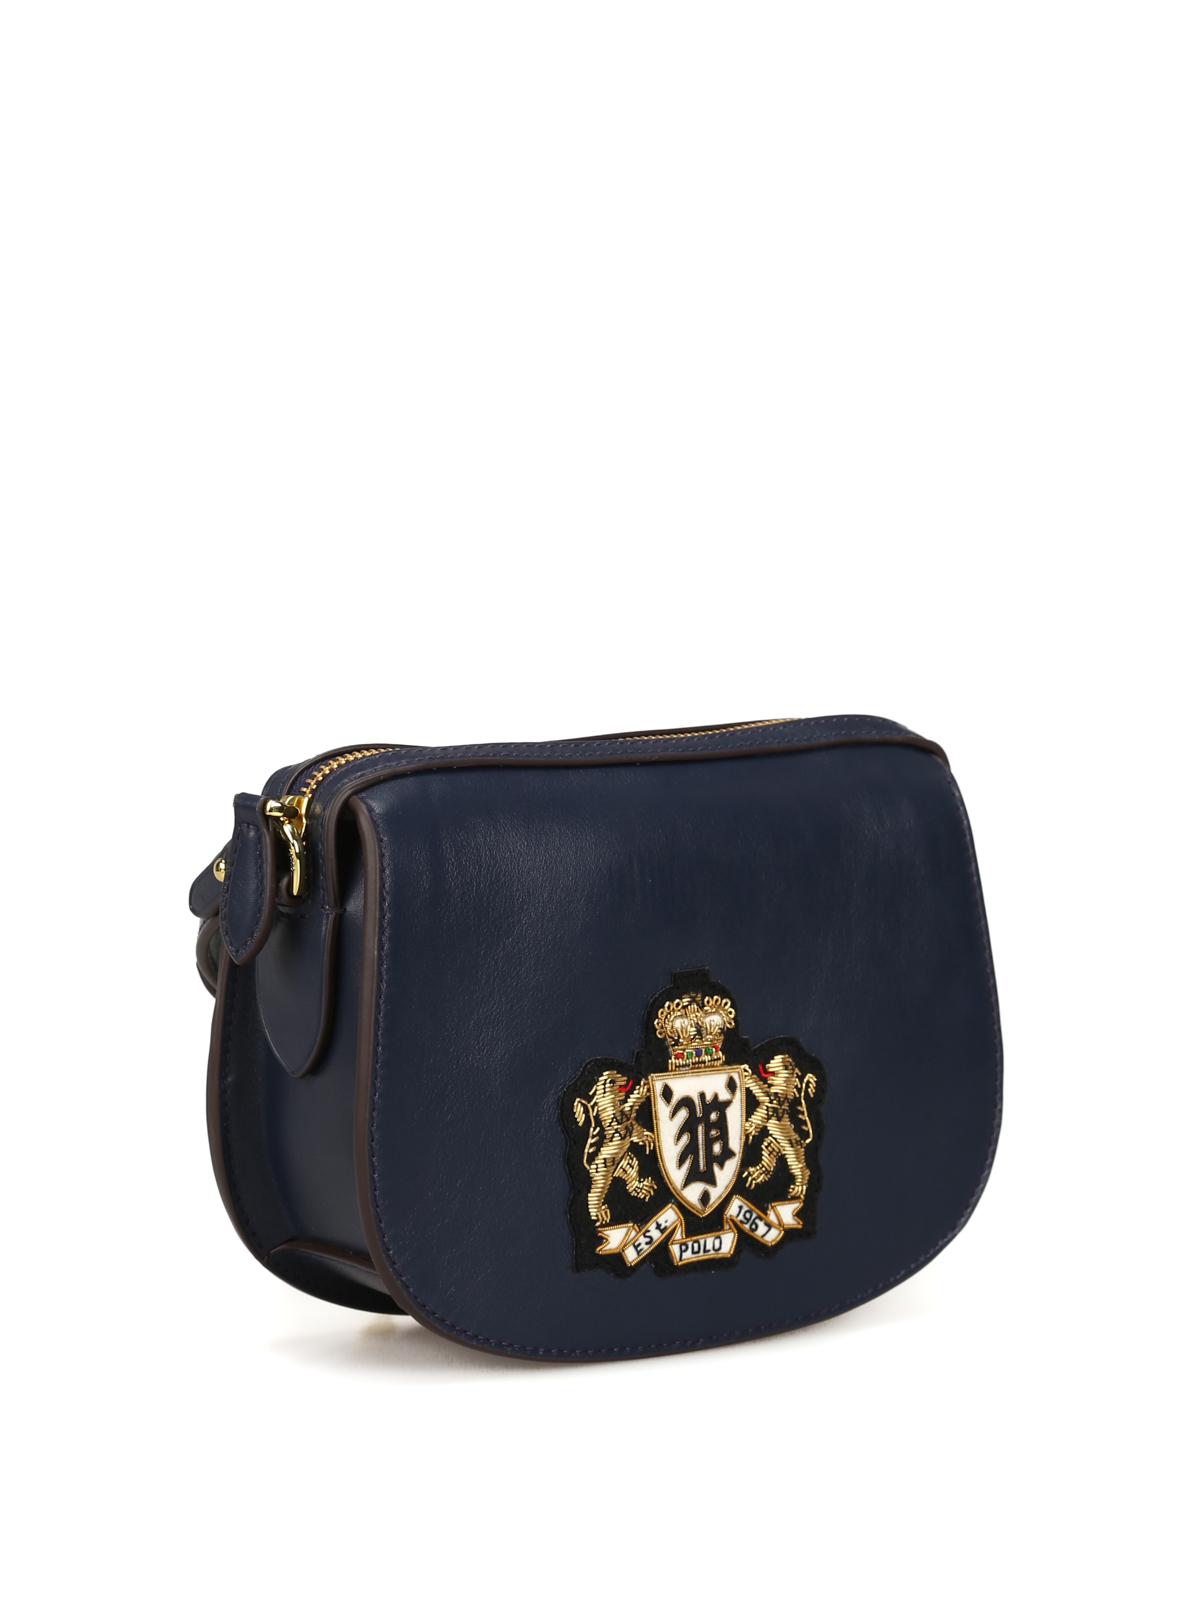 Shoulder bags Polo Ralph Lauren - Bullion Mini dark blue leather bag -  428745955001